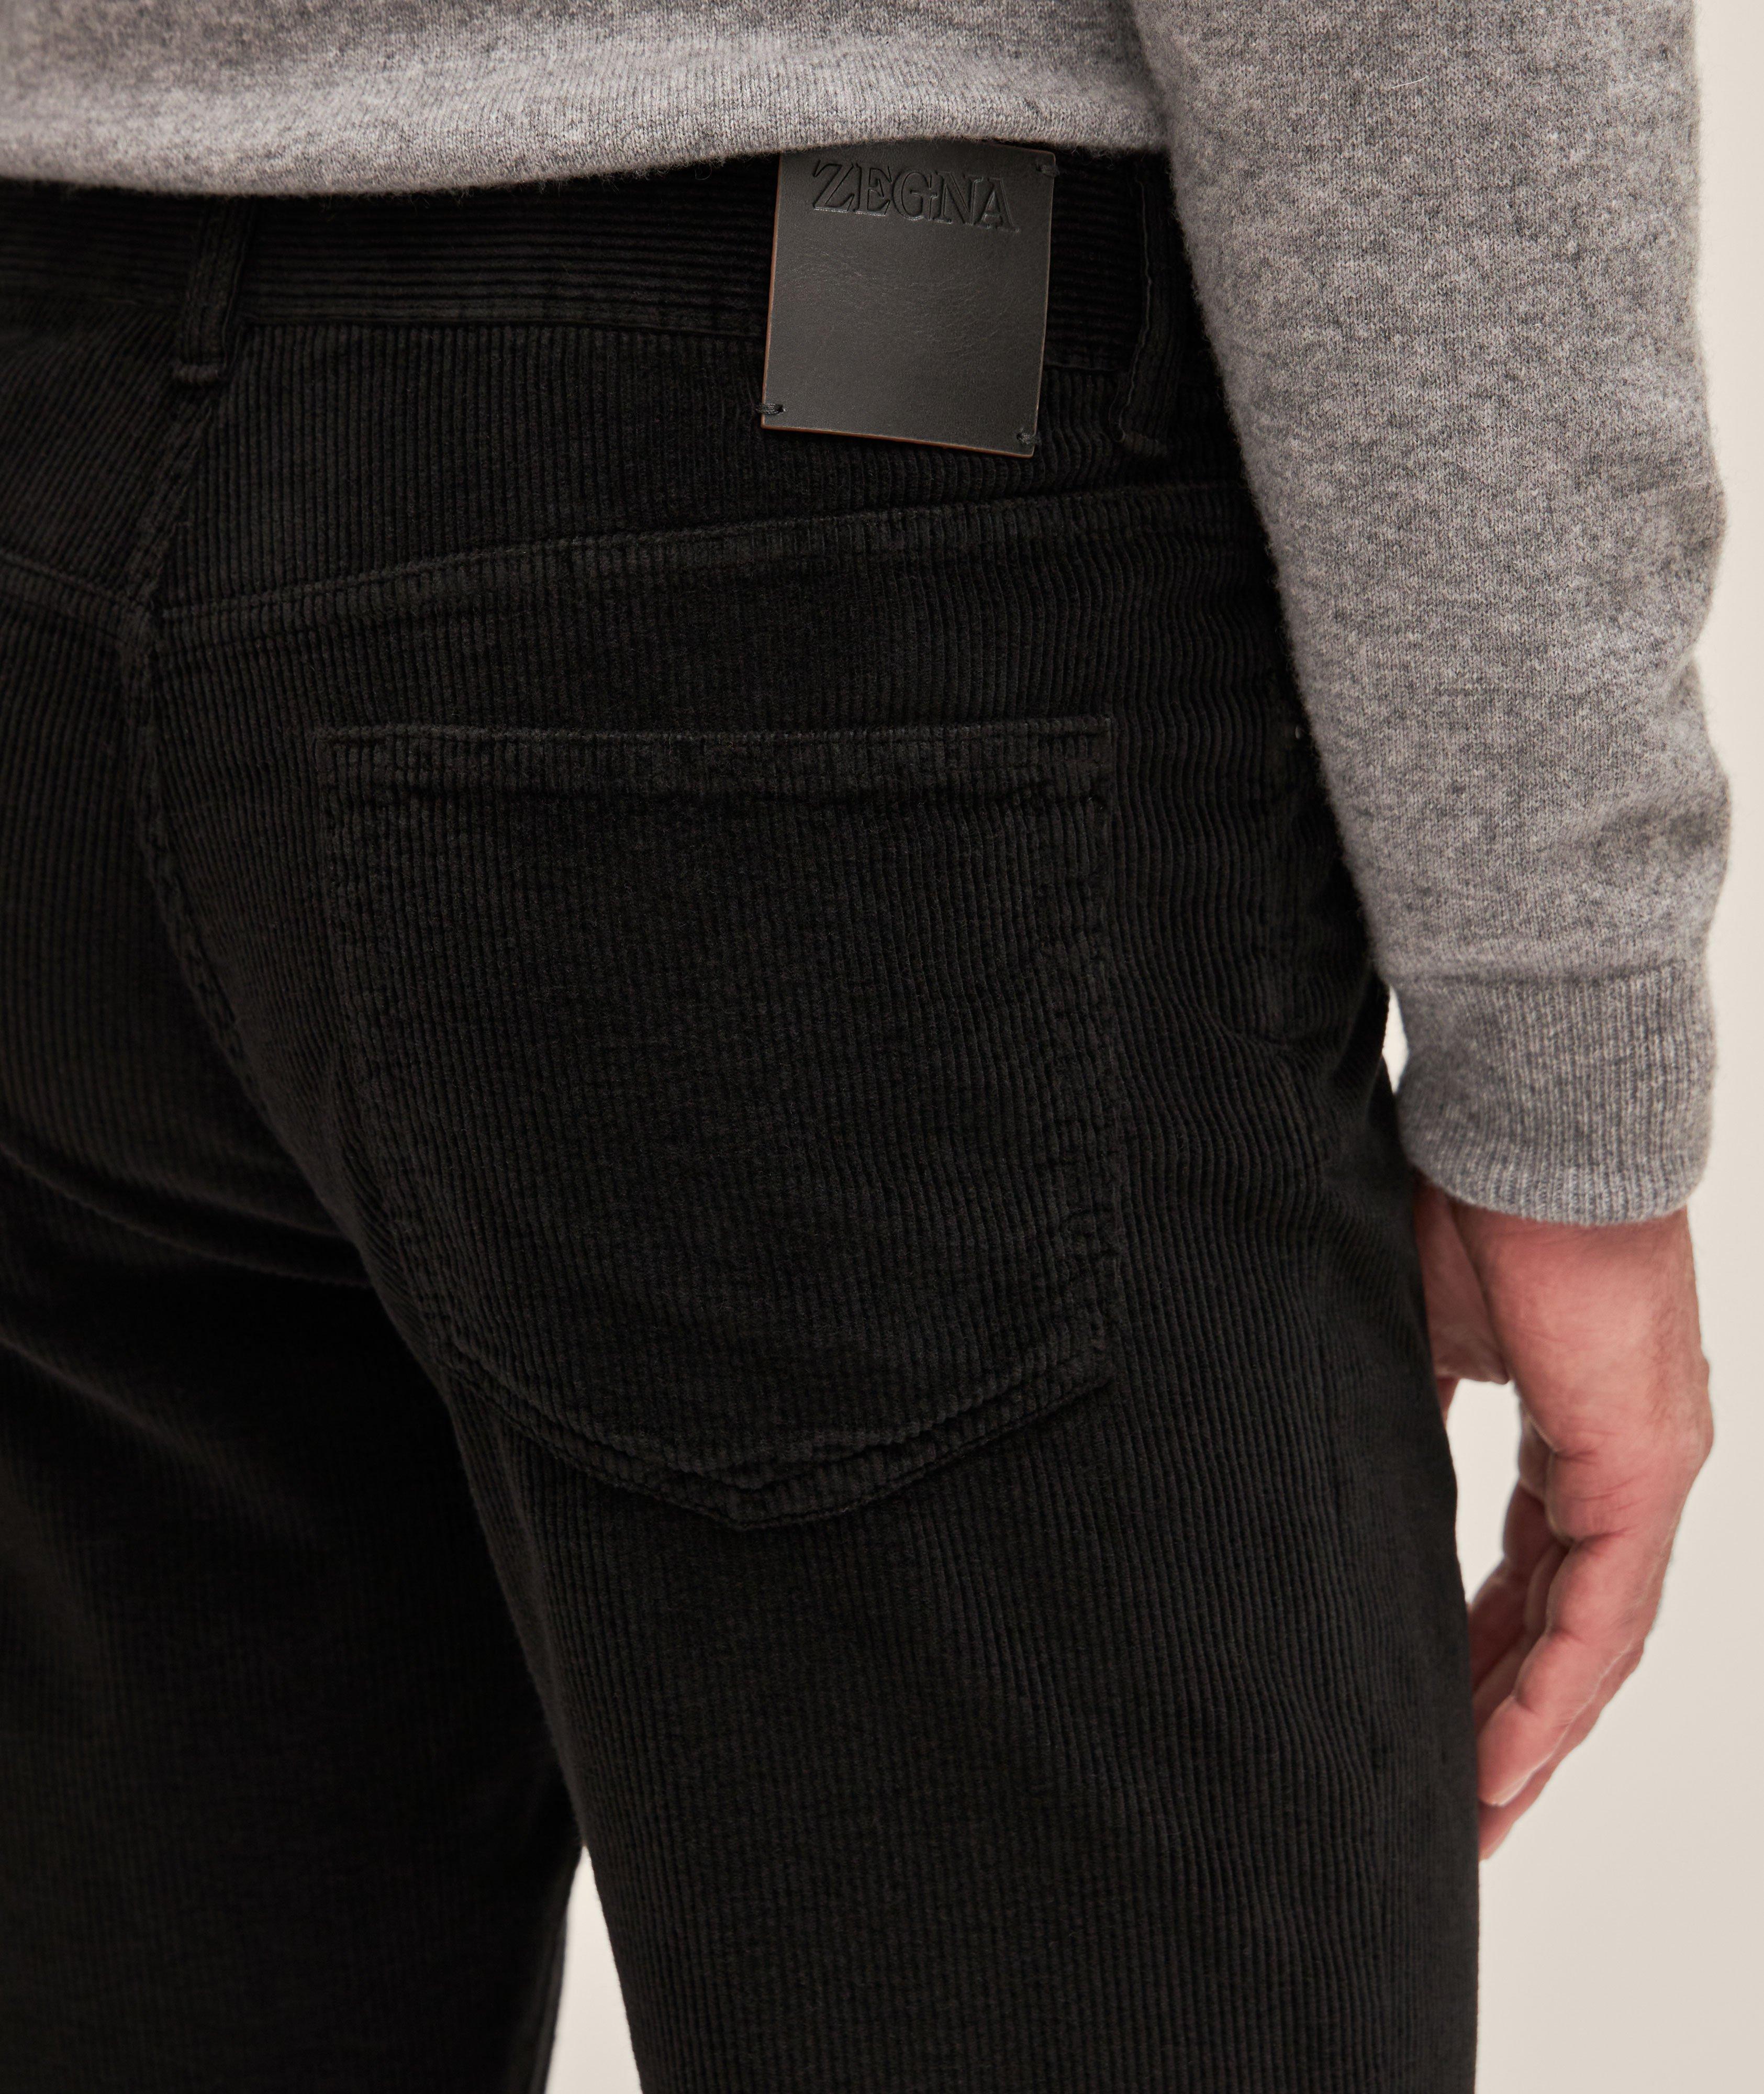 Straight Five-Pocket Corduroy Pants